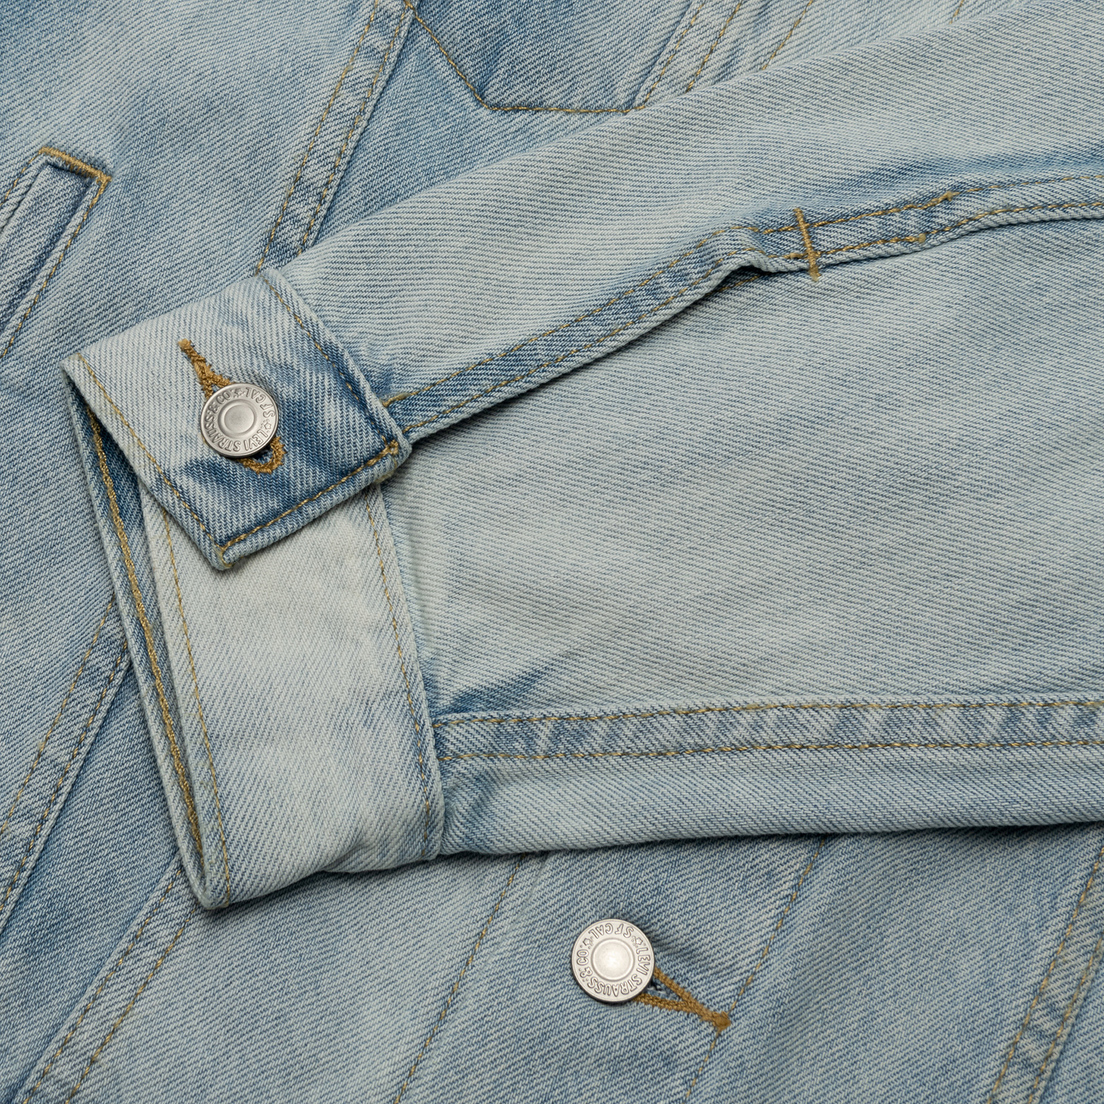 Levi's Мужская джинсовая куртка Vintage Fit Lite